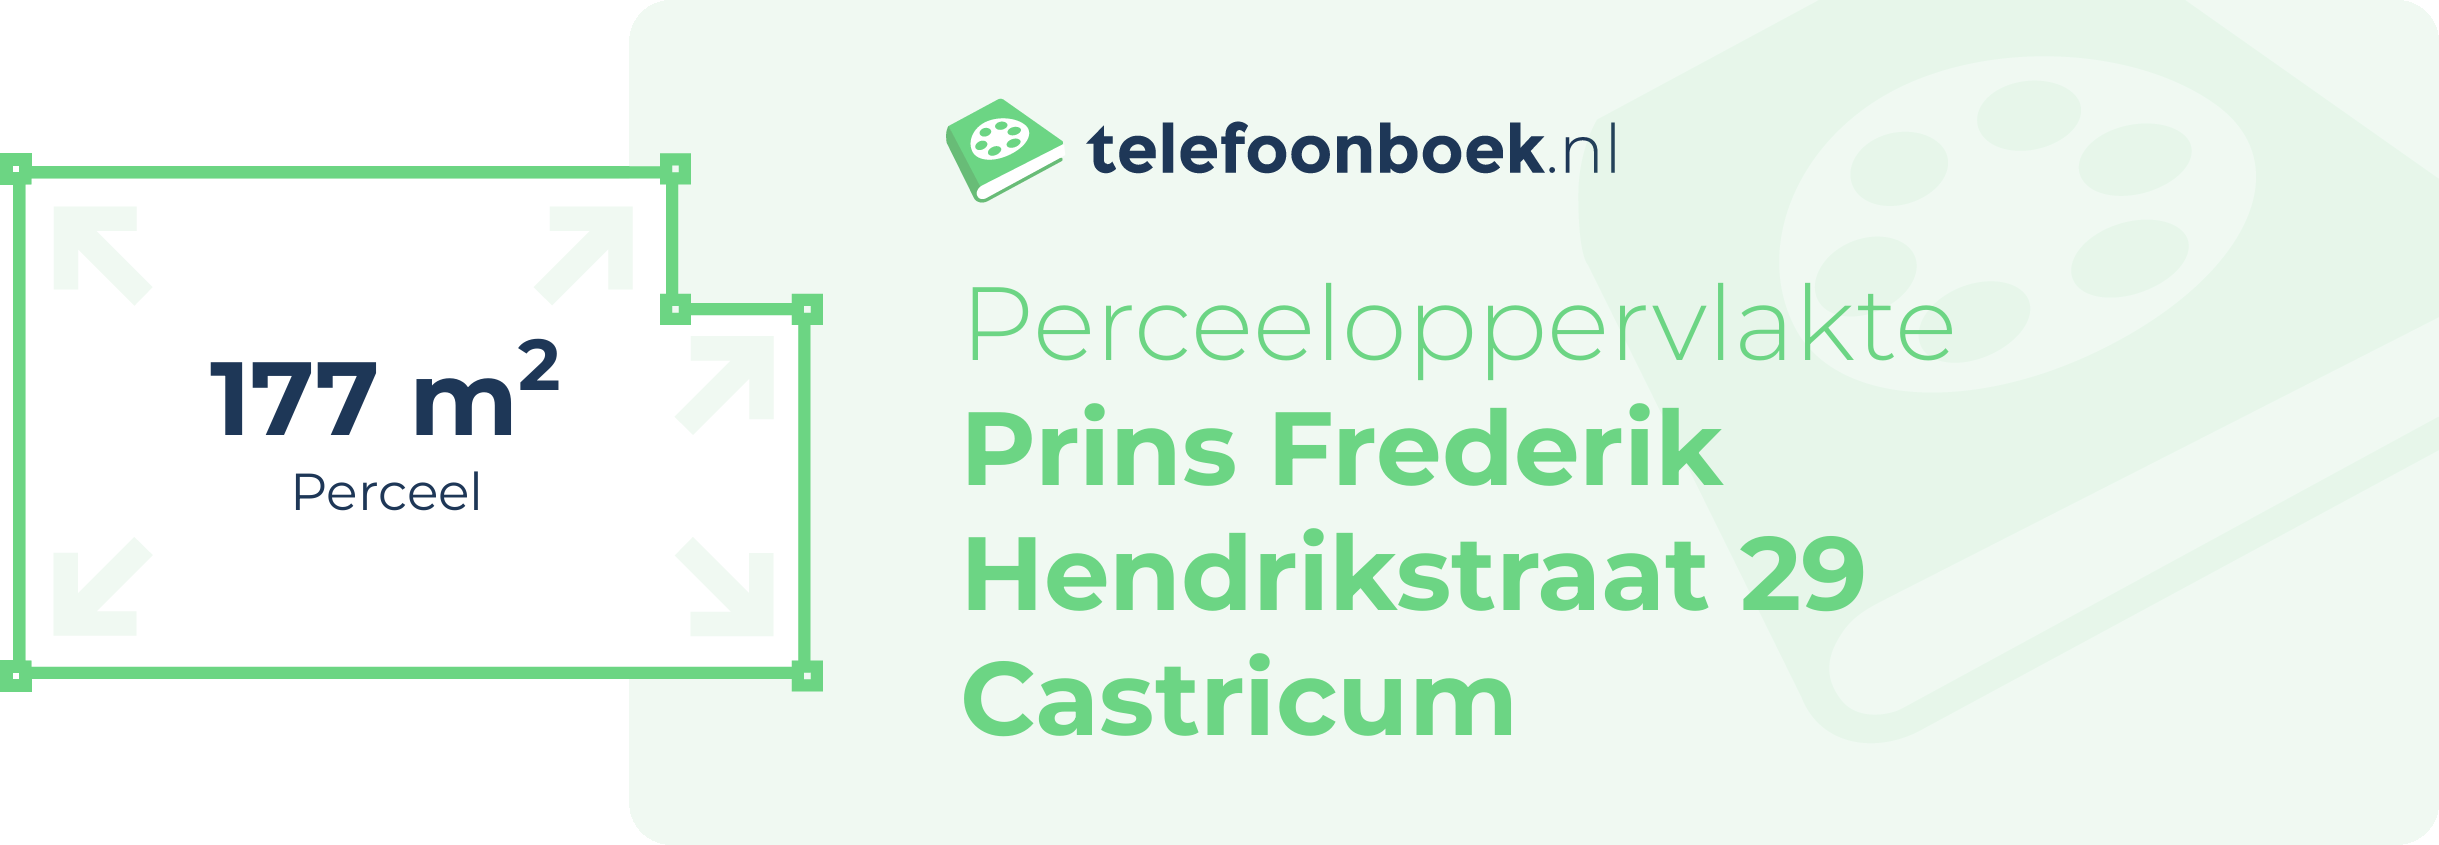 Perceeloppervlakte Prins Frederik Hendrikstraat 29 Castricum